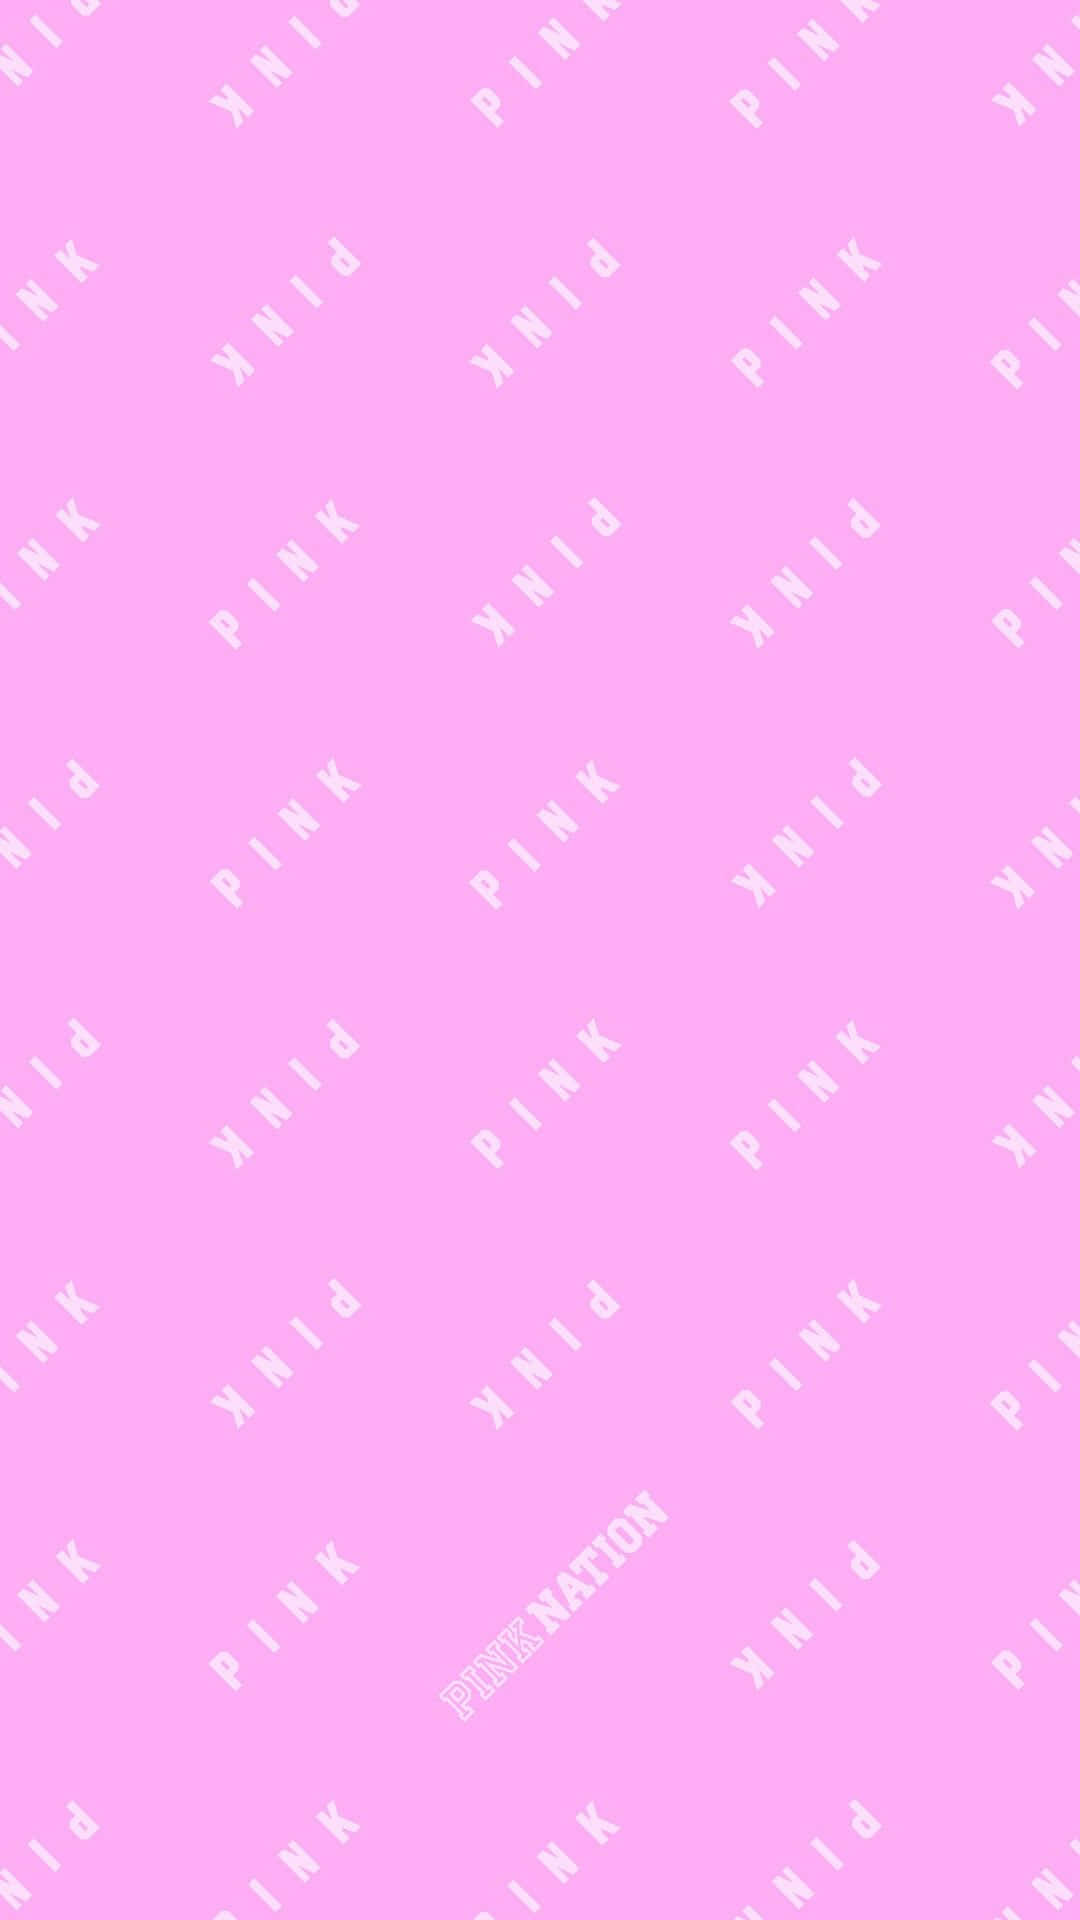 pink nation wallpaper tumblr